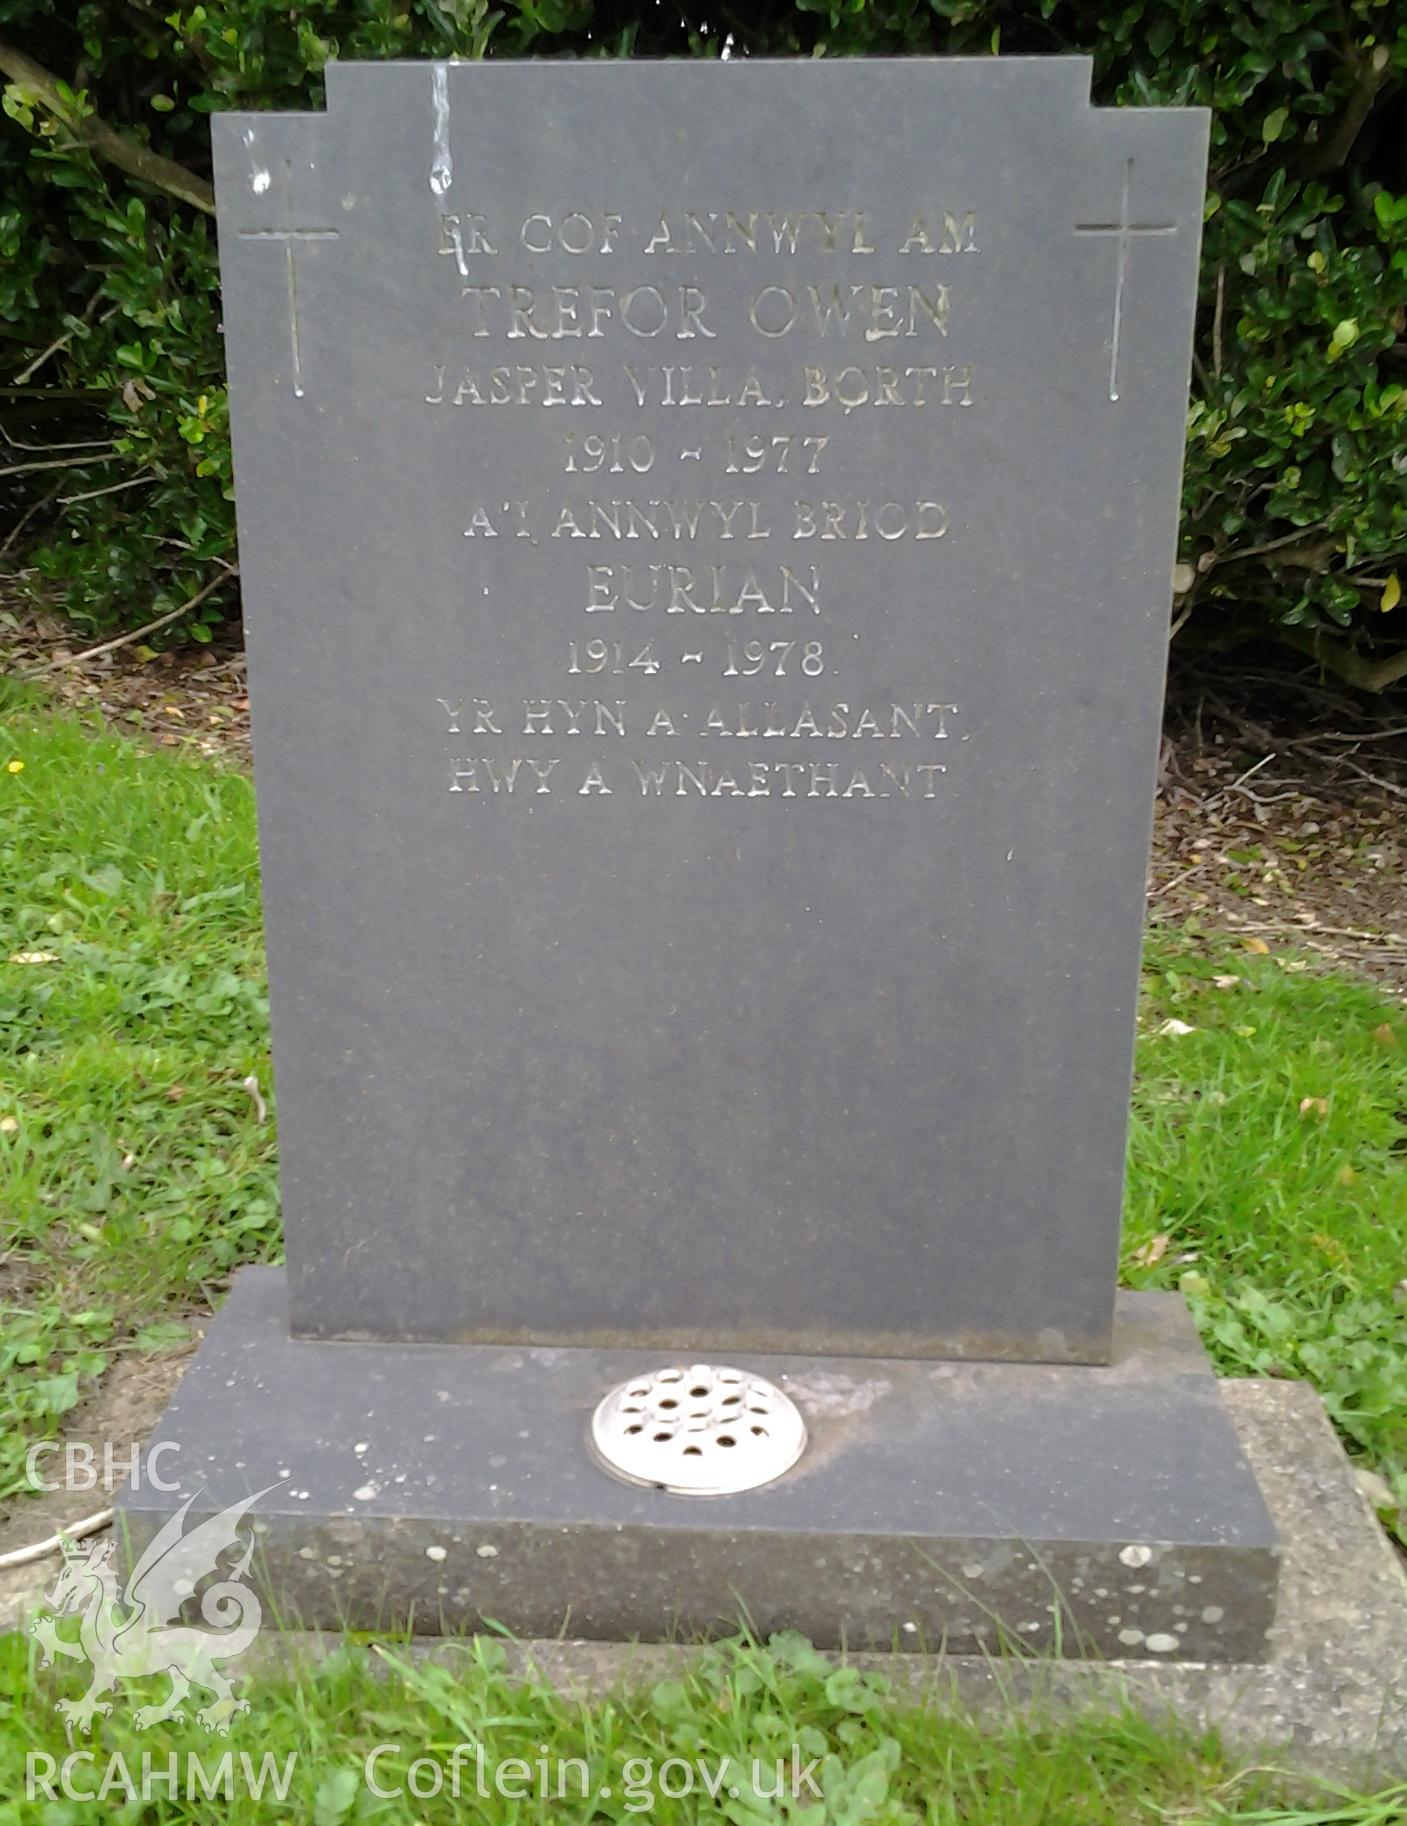 Memorial to Trefor Owen, Jasper Villa, Borth, died 1977